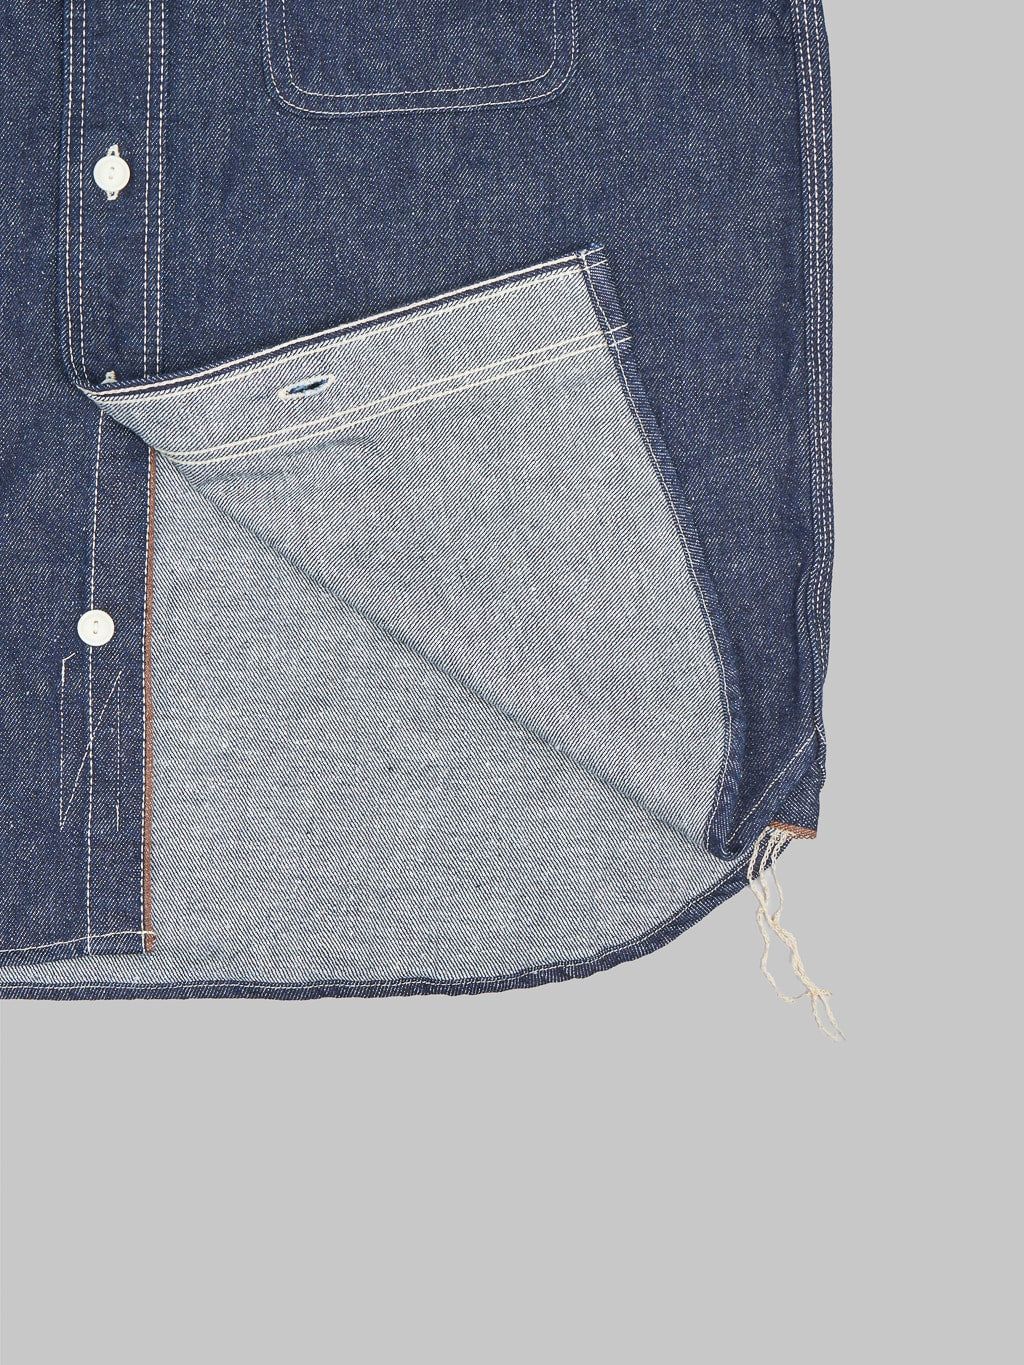 Samurai jeans denim work shirt chain stitching